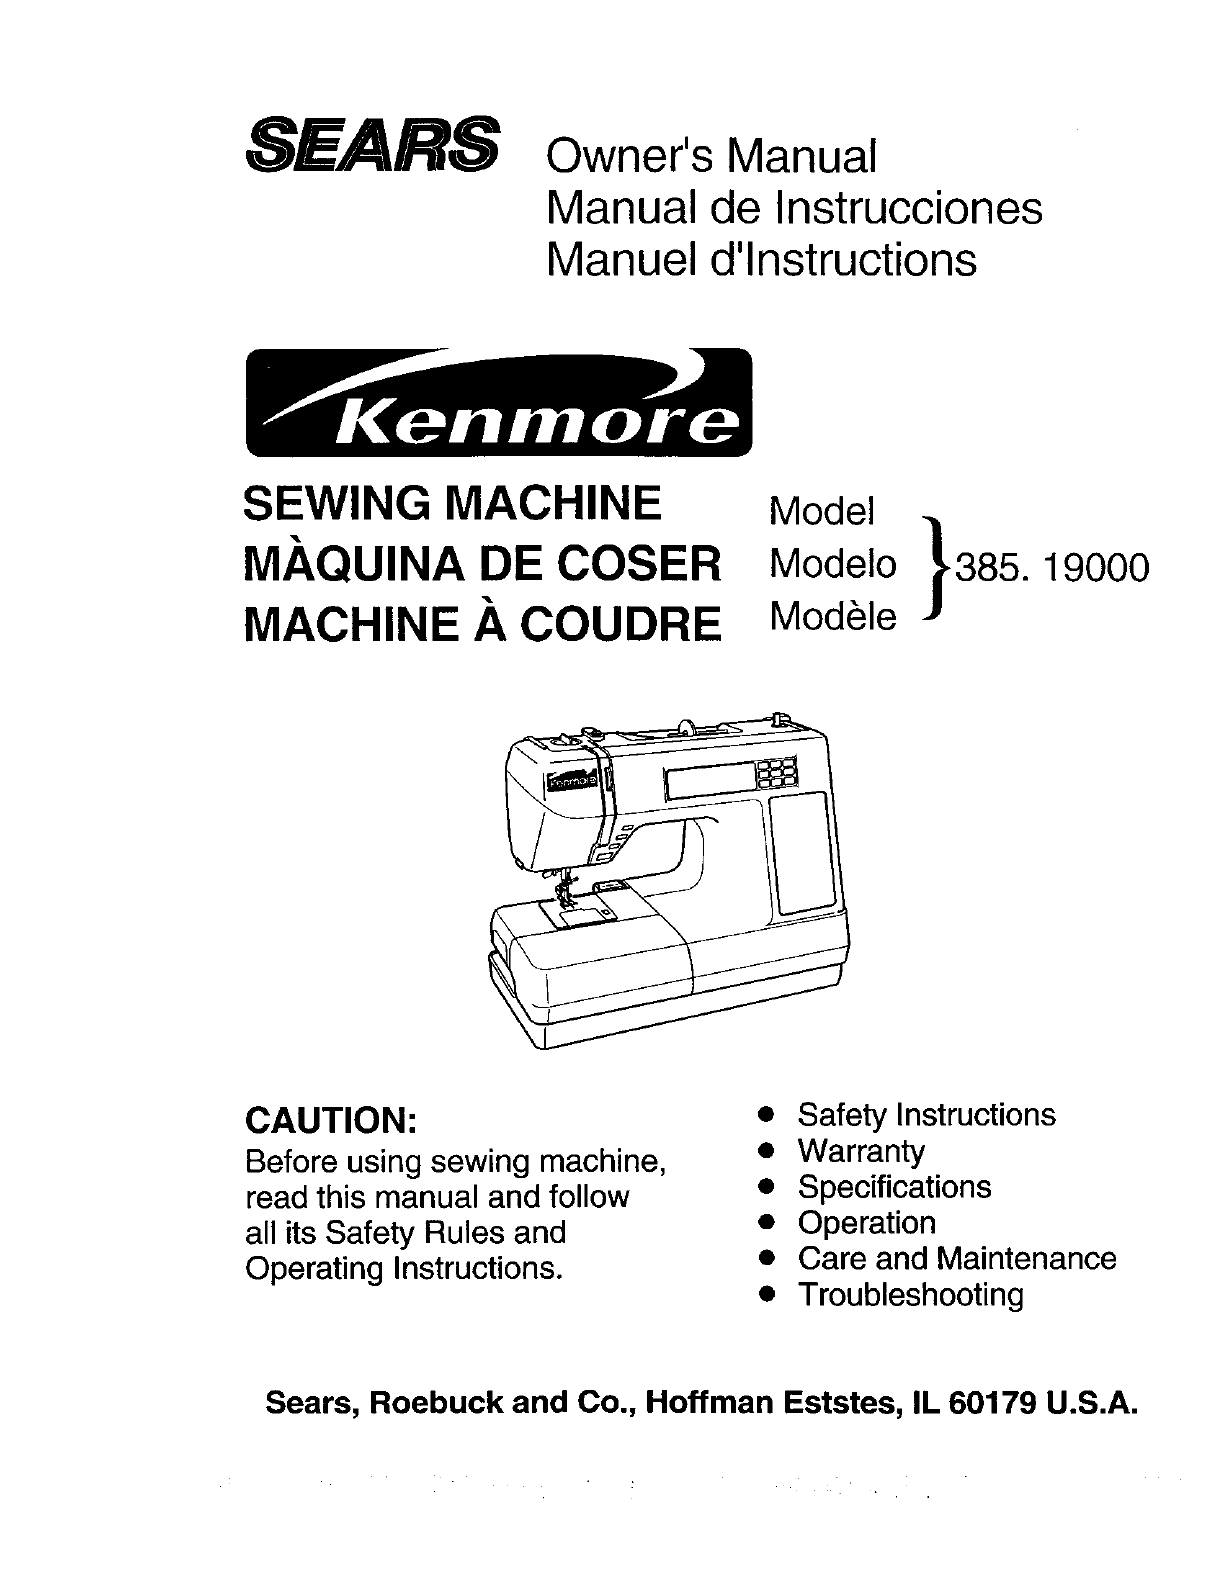 Kenmore sewing machine troubleshooting manual